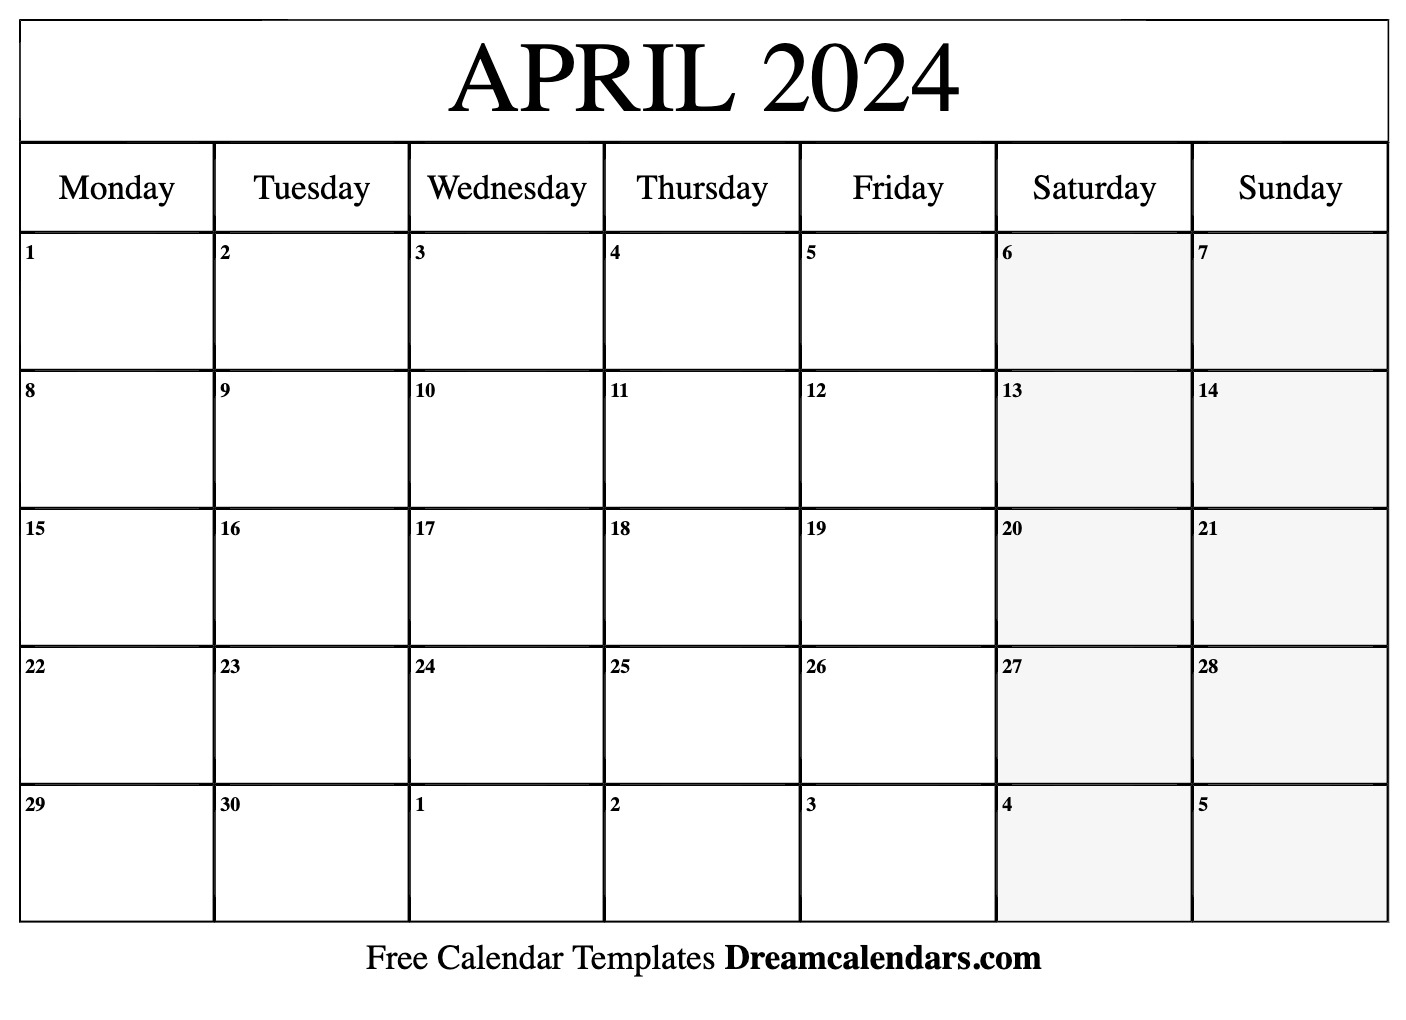 April 2024 Calendar | Free Blank Printable With Holidays for Blank Calendar April 2024 Free Printable